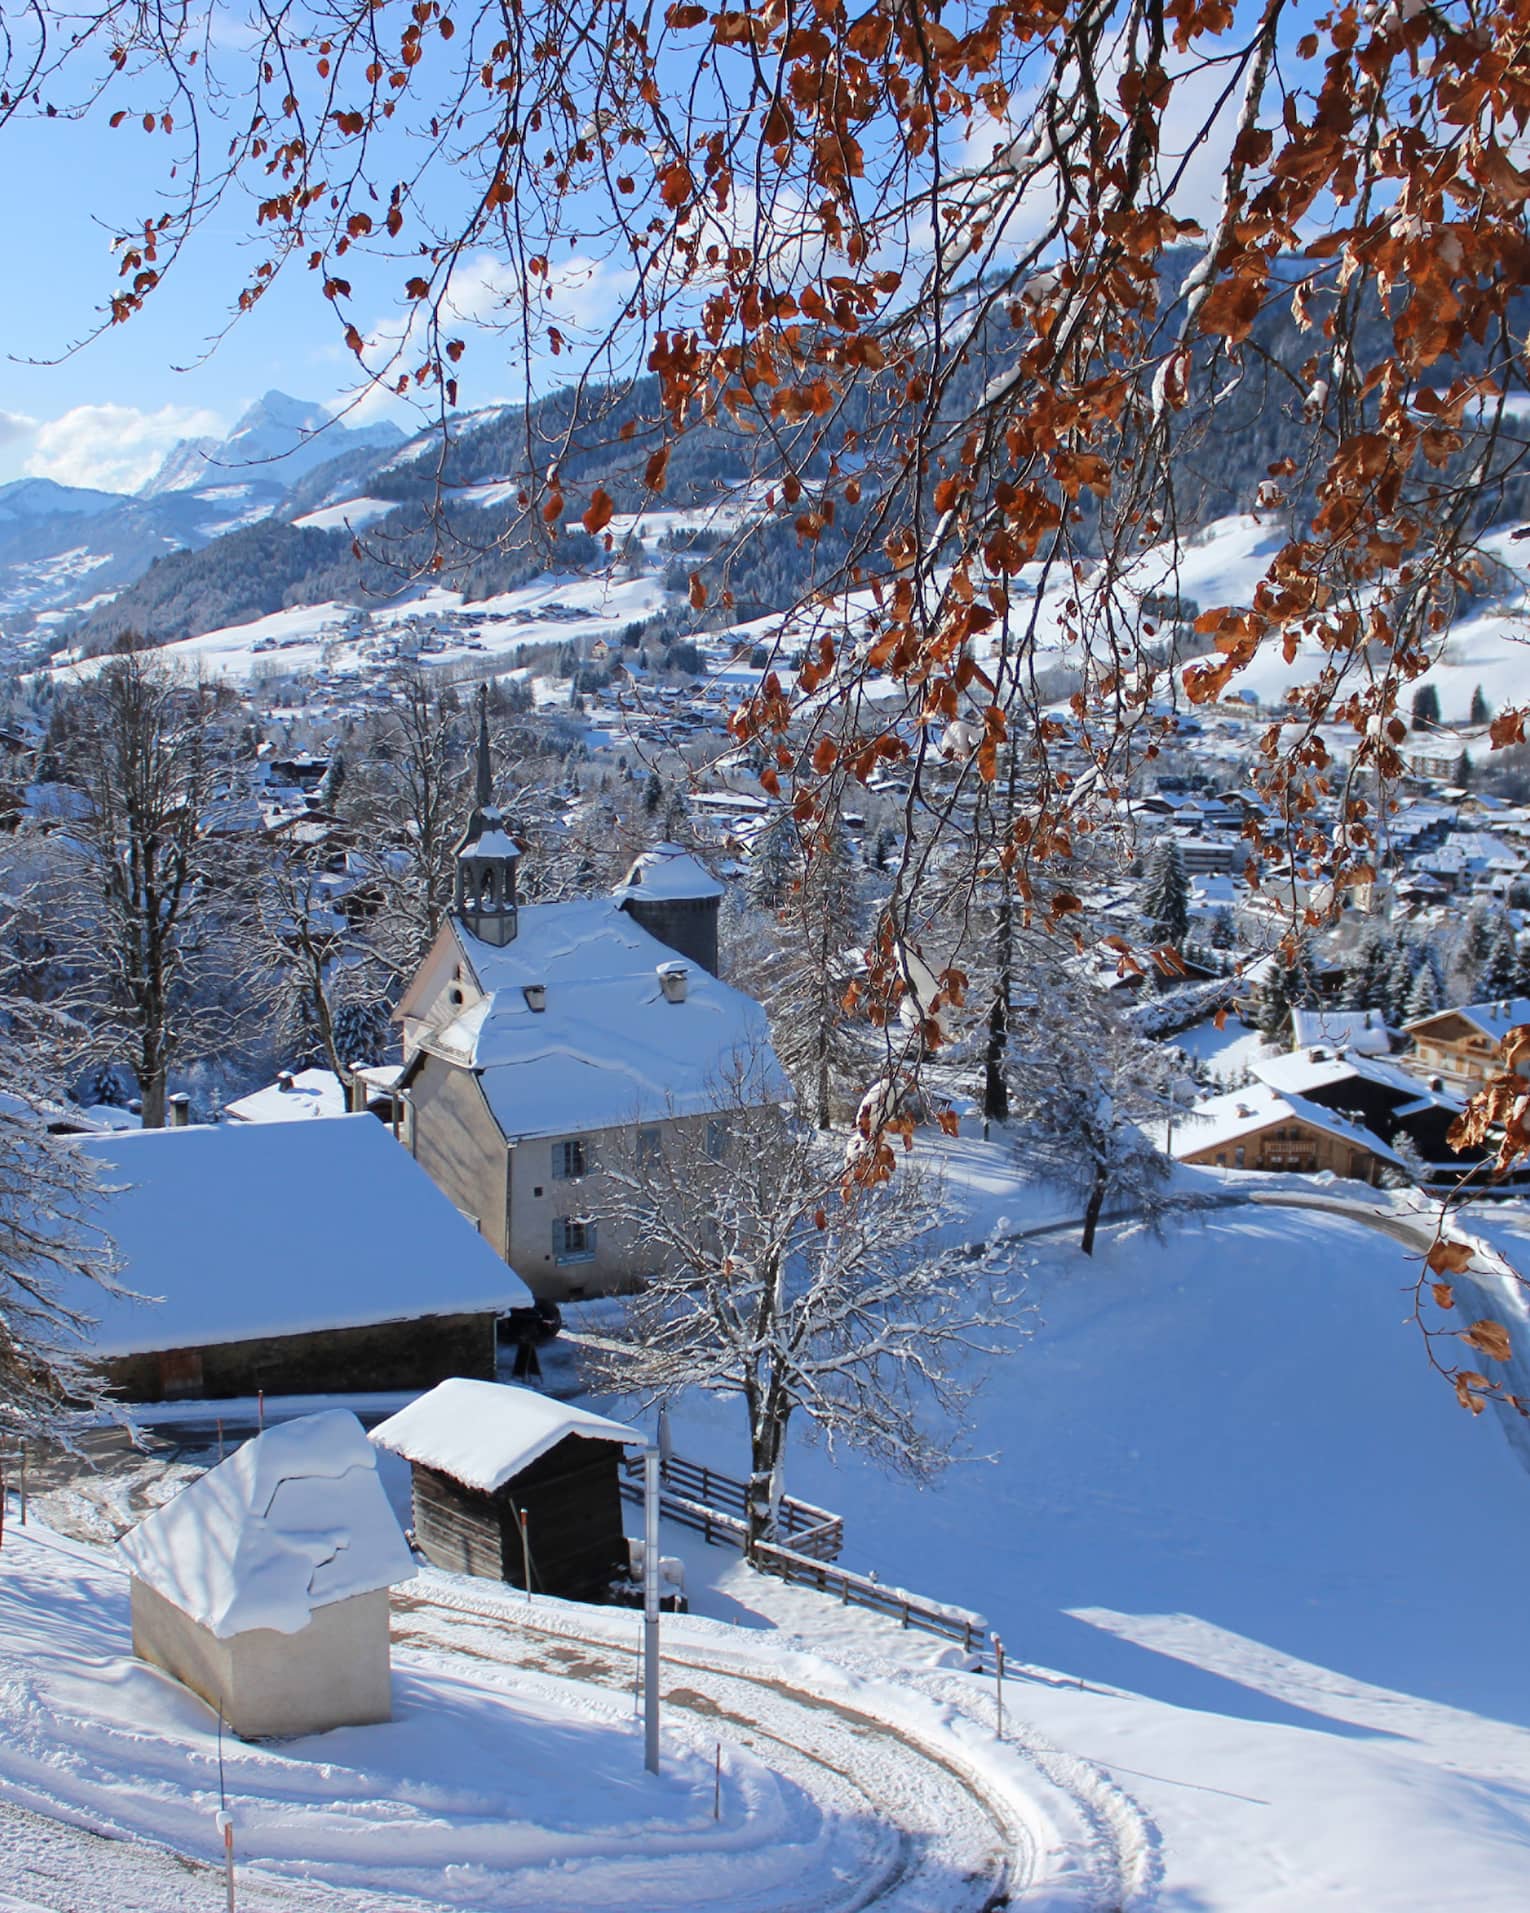 The snow-covered Megève Calvary just above the Mègeve village